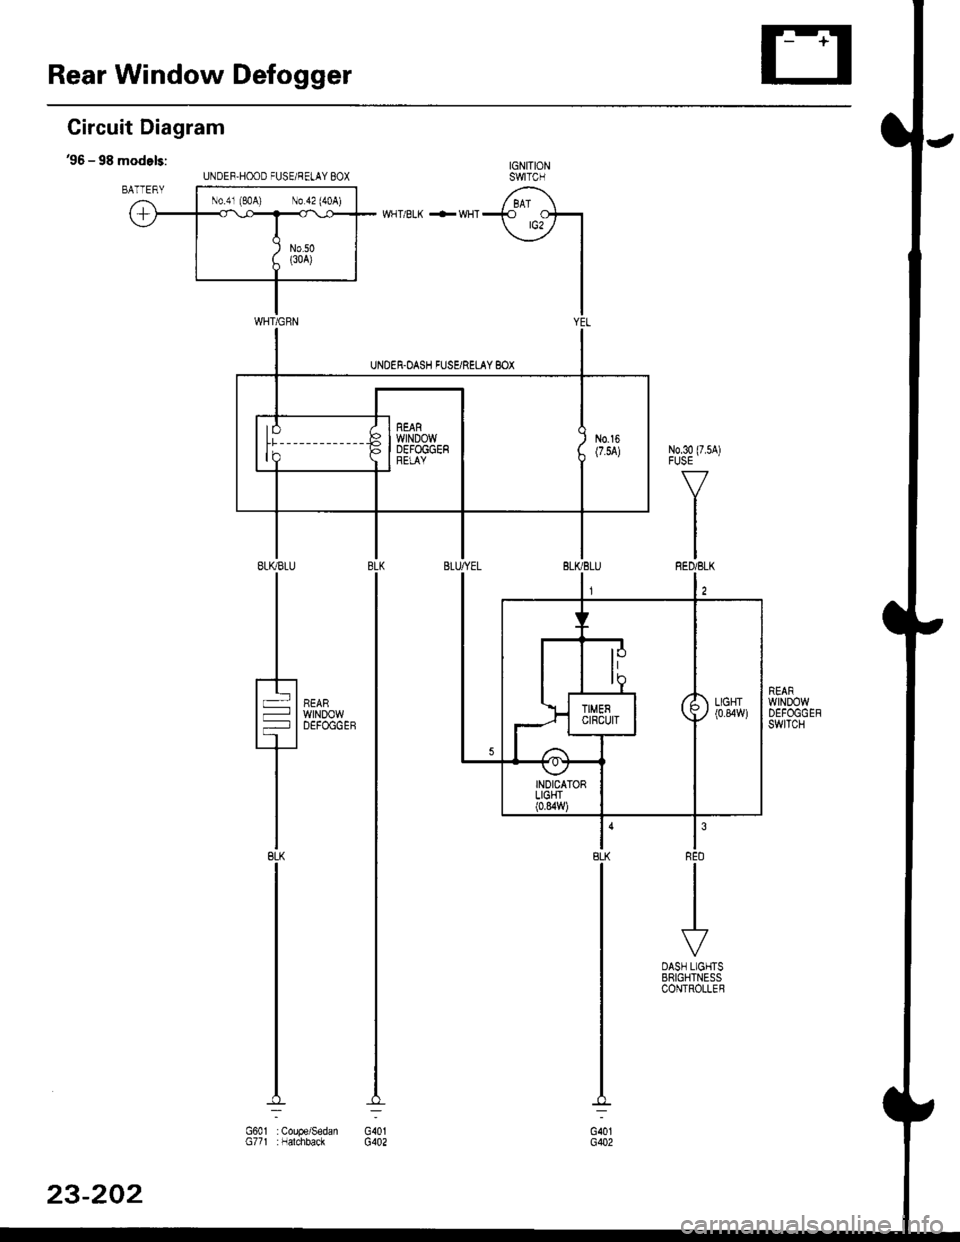 HONDA CIVIC 2000 6.G Workshop Manual Rear Window Defogger
Circuit Diagram
36 - 98 models:IGNITIONswtTcH
/ BAT \+ otst
\:7 |
I
IIYE
WHT/BLK +WHT
wtNDow
BLKBLU
It-lt-l
TBLK
UNOEF,HOOD FUSE/RELAY BOX
N0.41 (e,oA) No a2 (aoA)
G40lG402G601 :